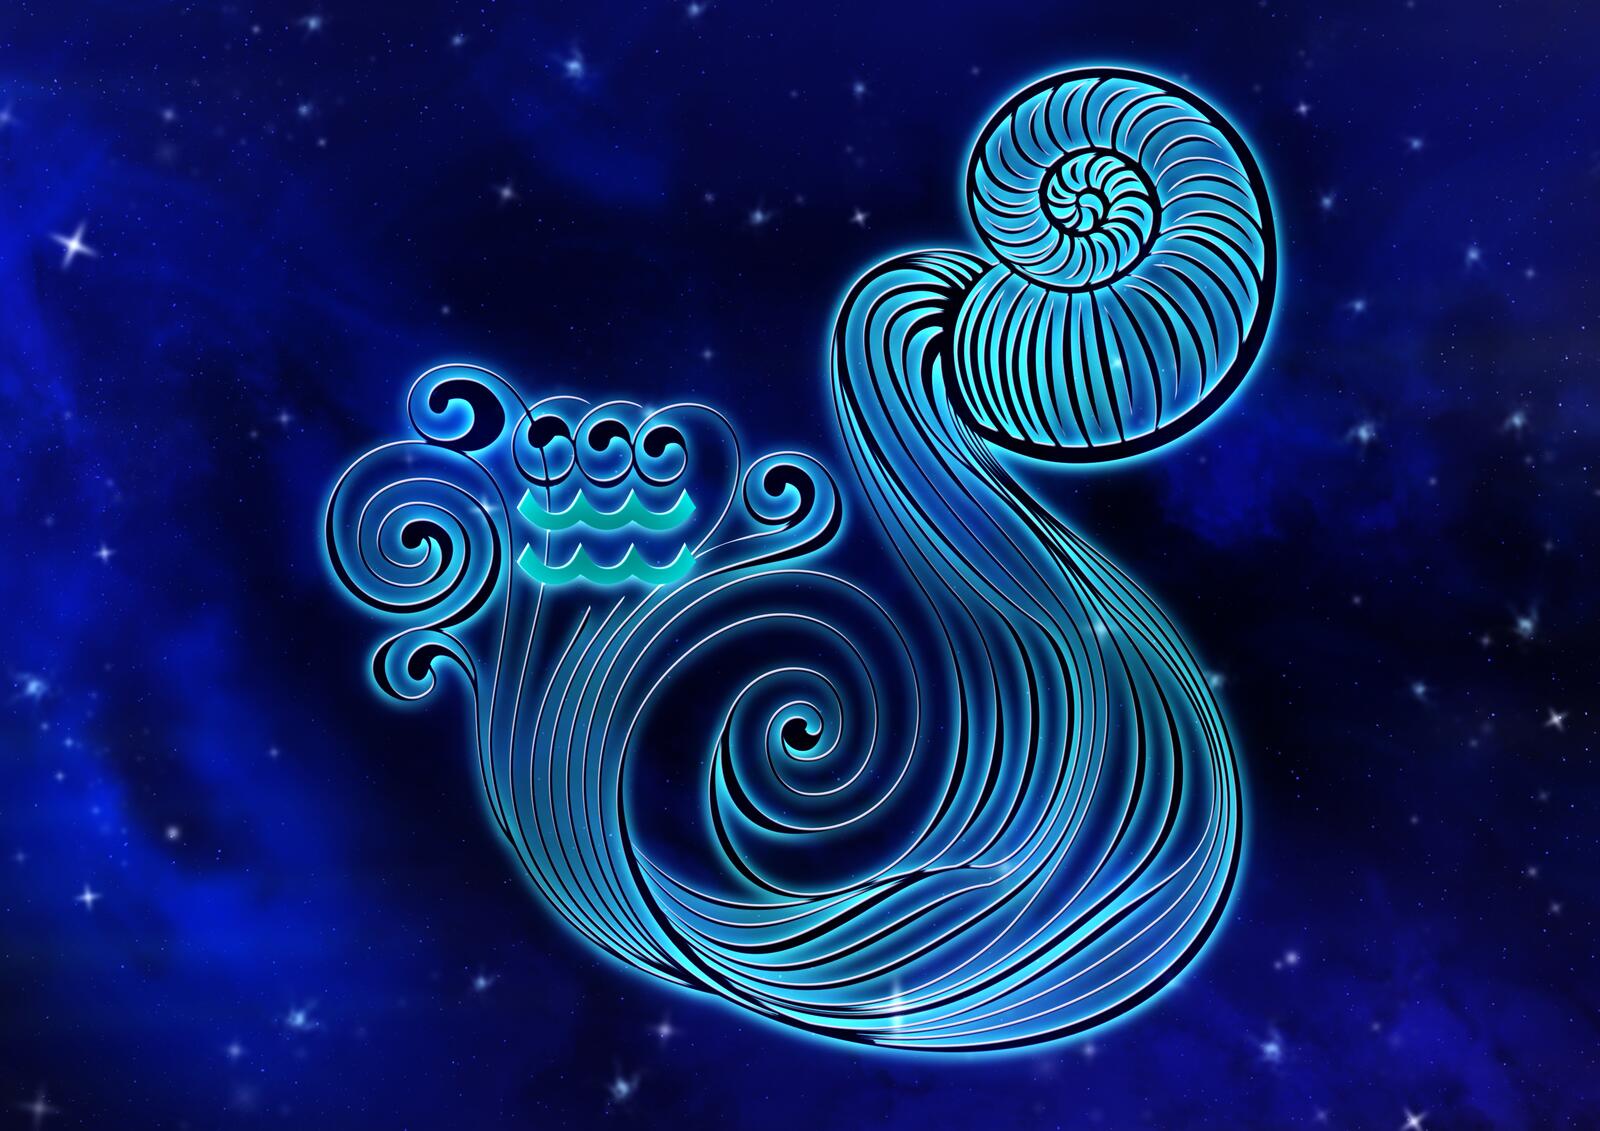 Wallpapers Aquarius zodiac sign horoscope on the desktop